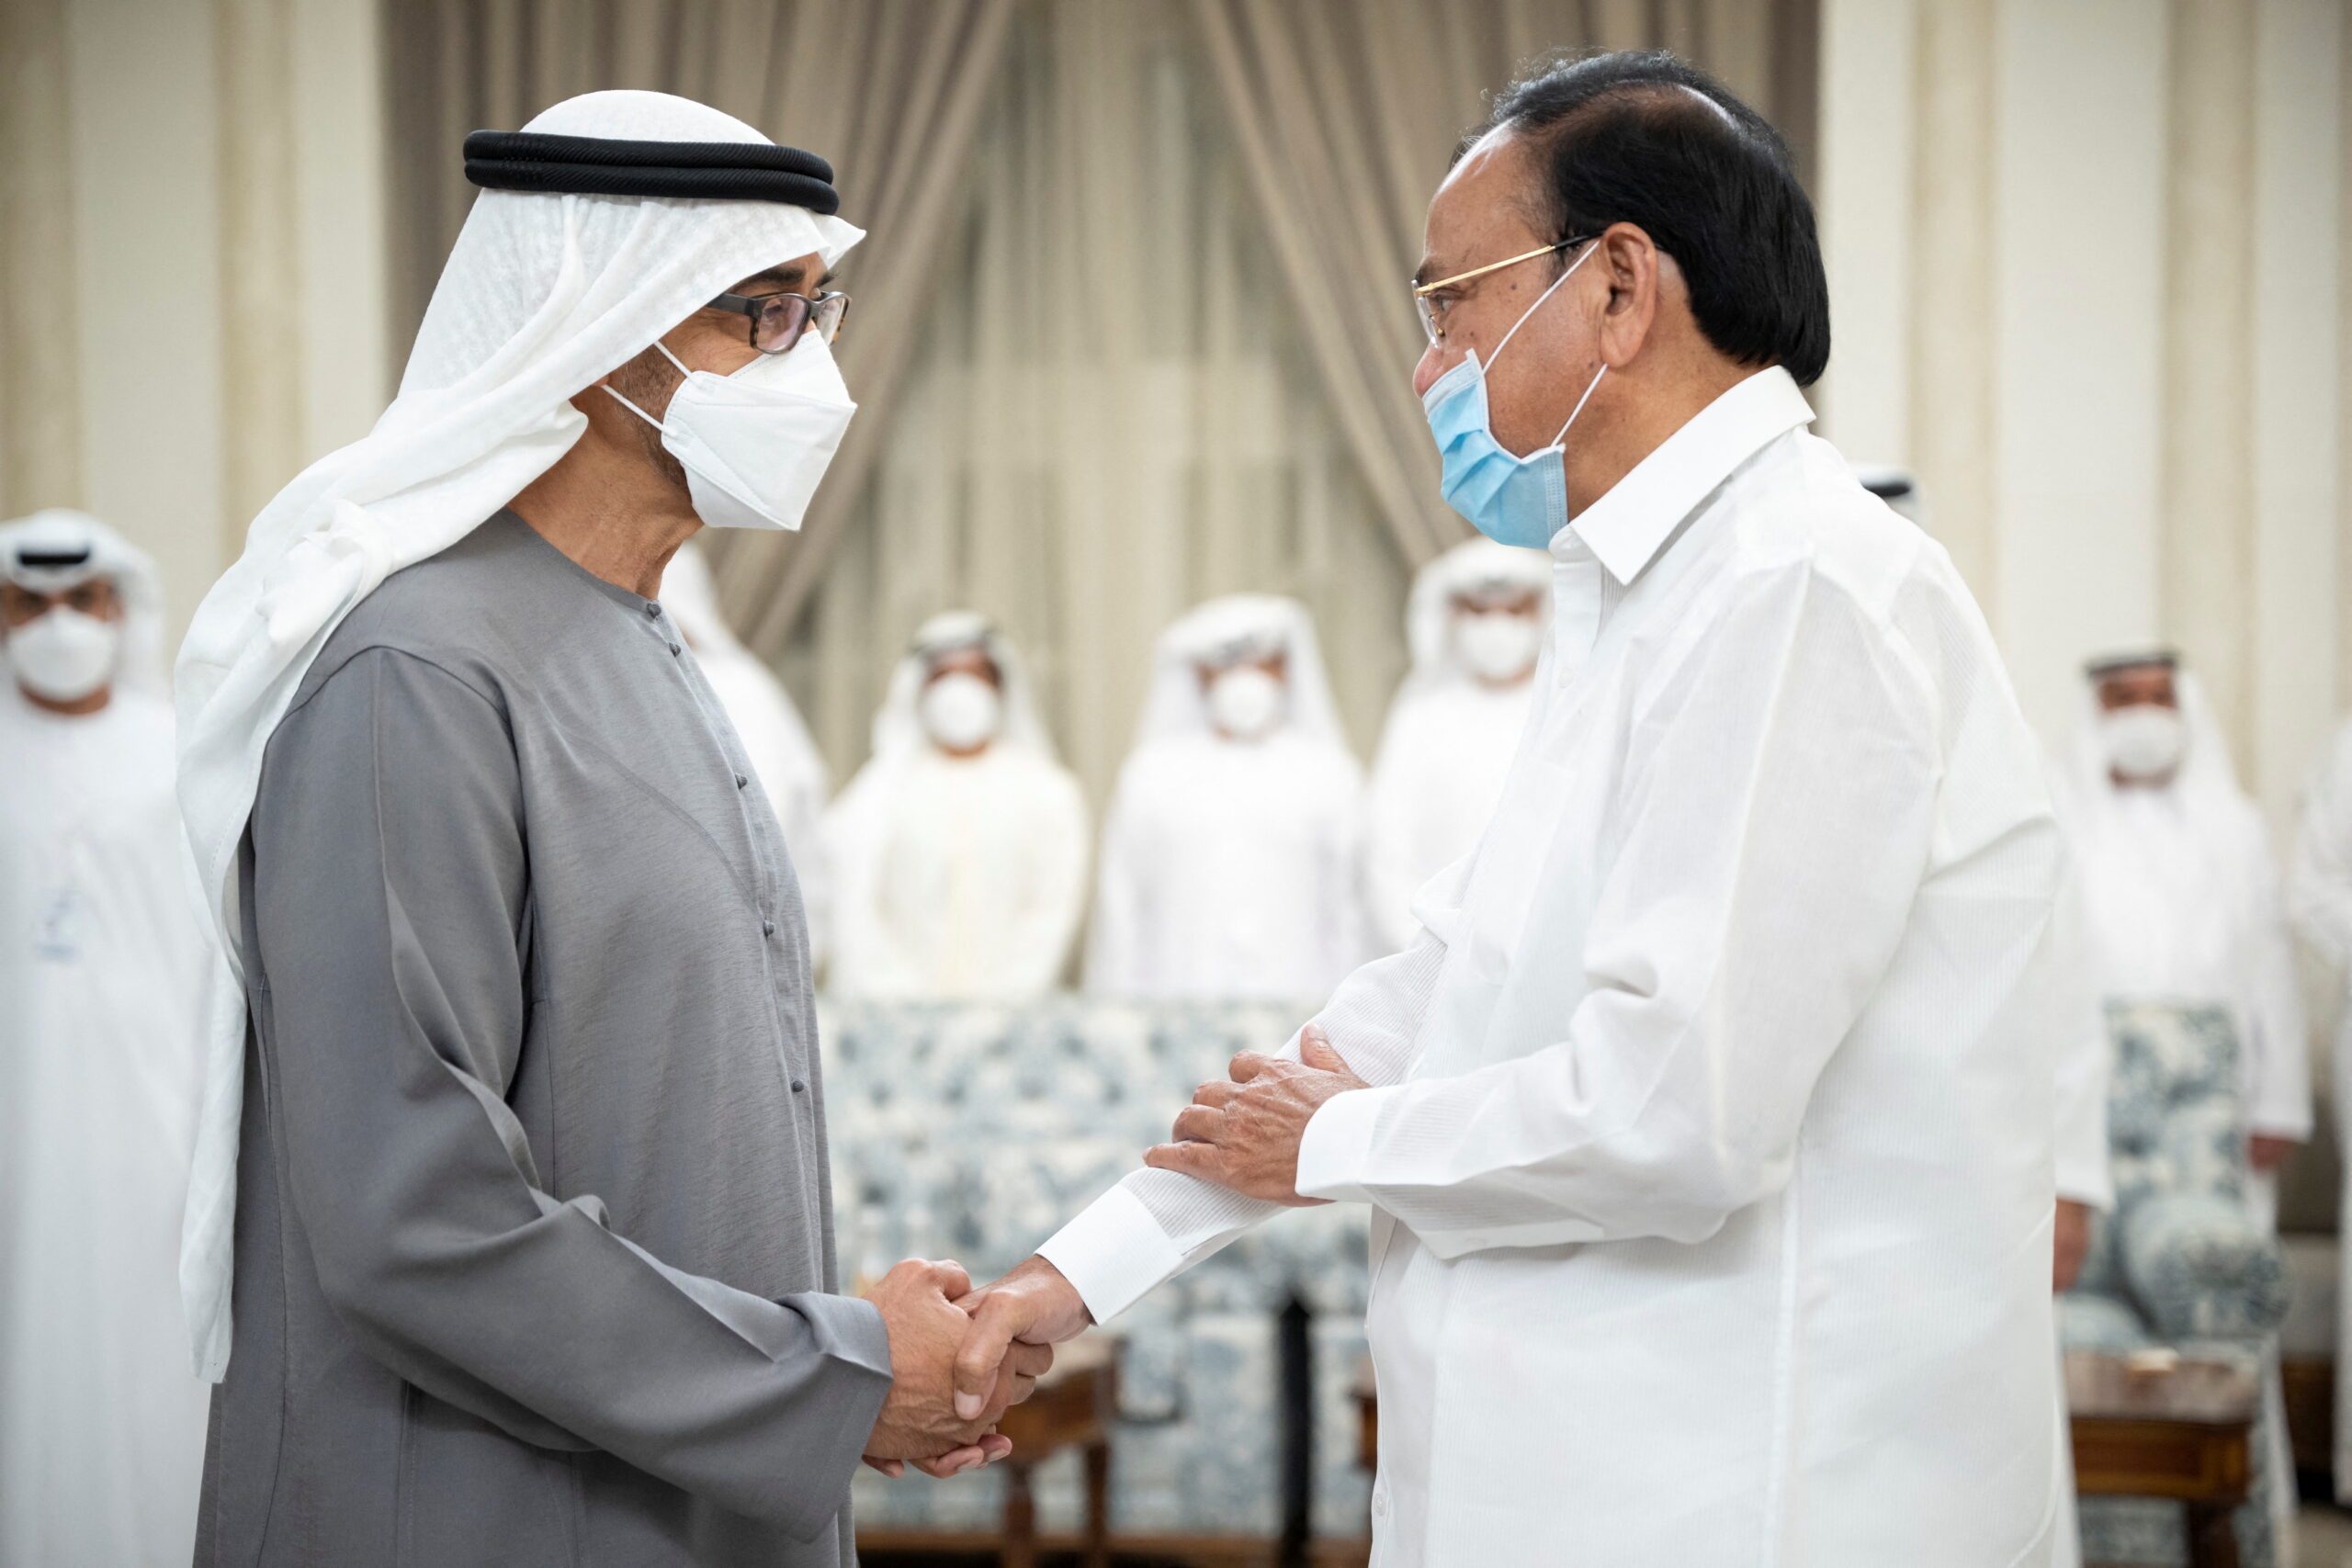 India's vice president Venkaiah Naidu offers condolences to Sheikh Mohammed bin Zayed al-Nahyan